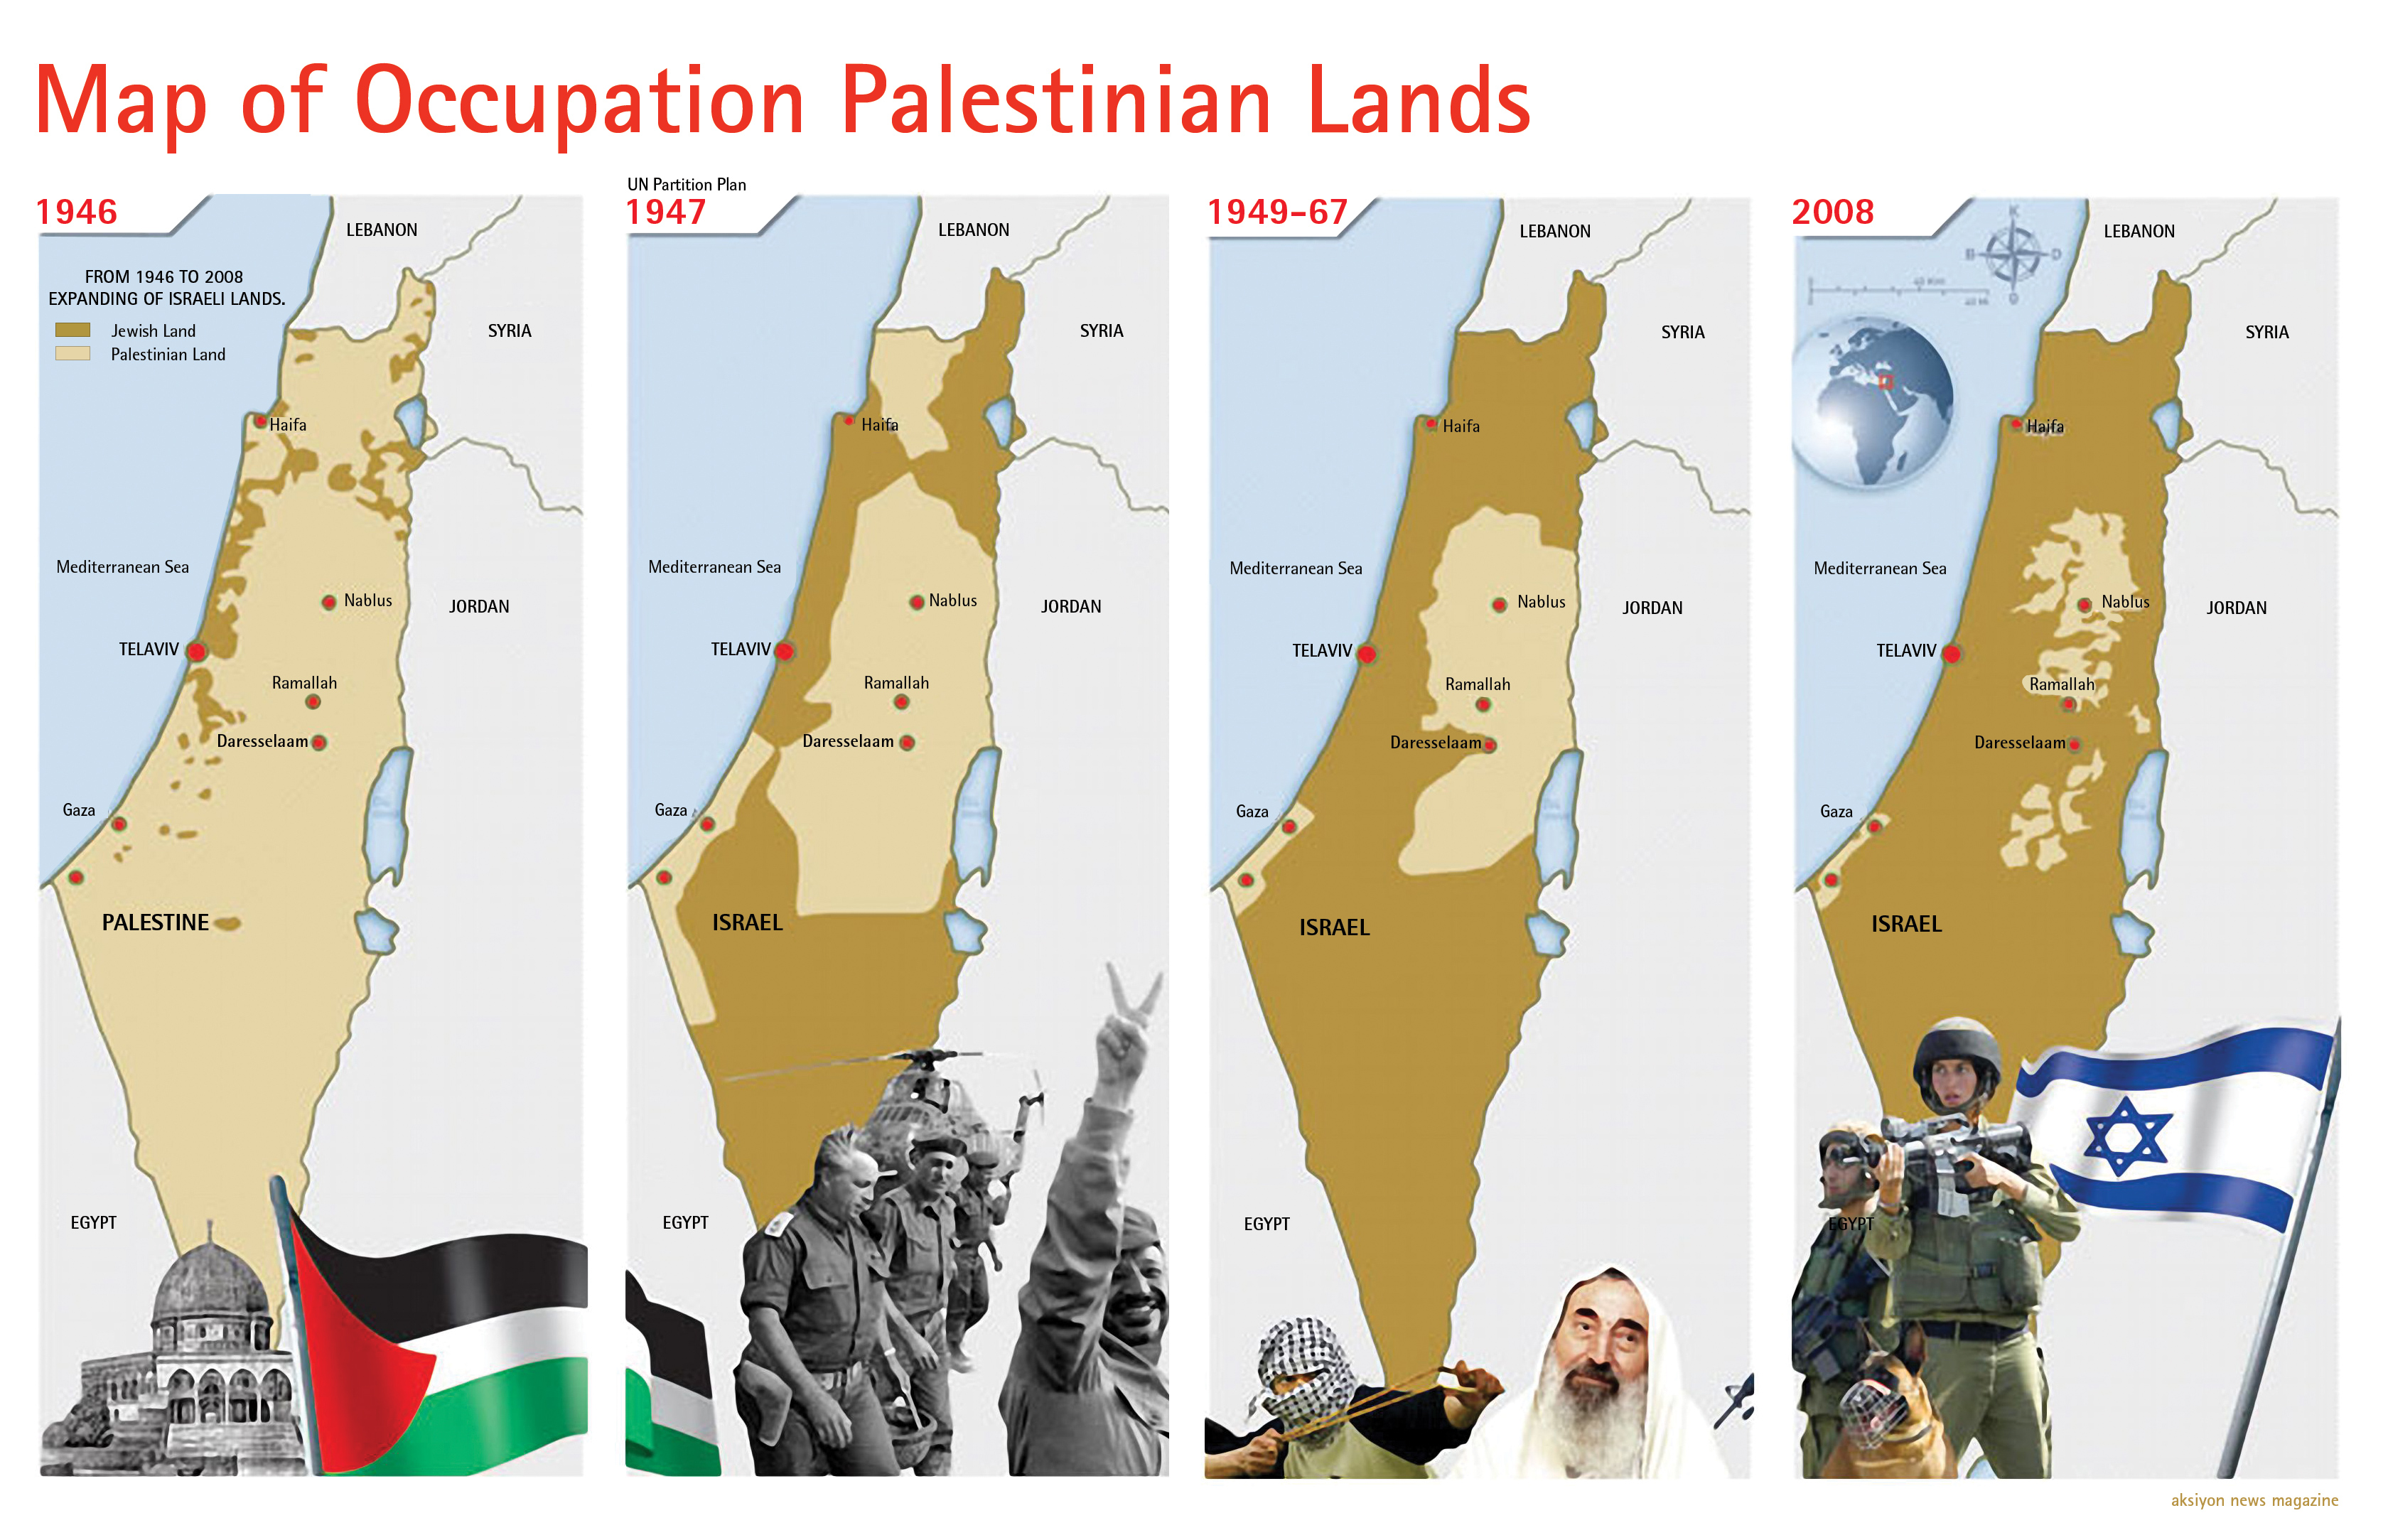 https://fc06.deviantart.net/fs41/f/2009/006/b/2/Map_of_Occupation_Palestinian_by_ademmm.jpg